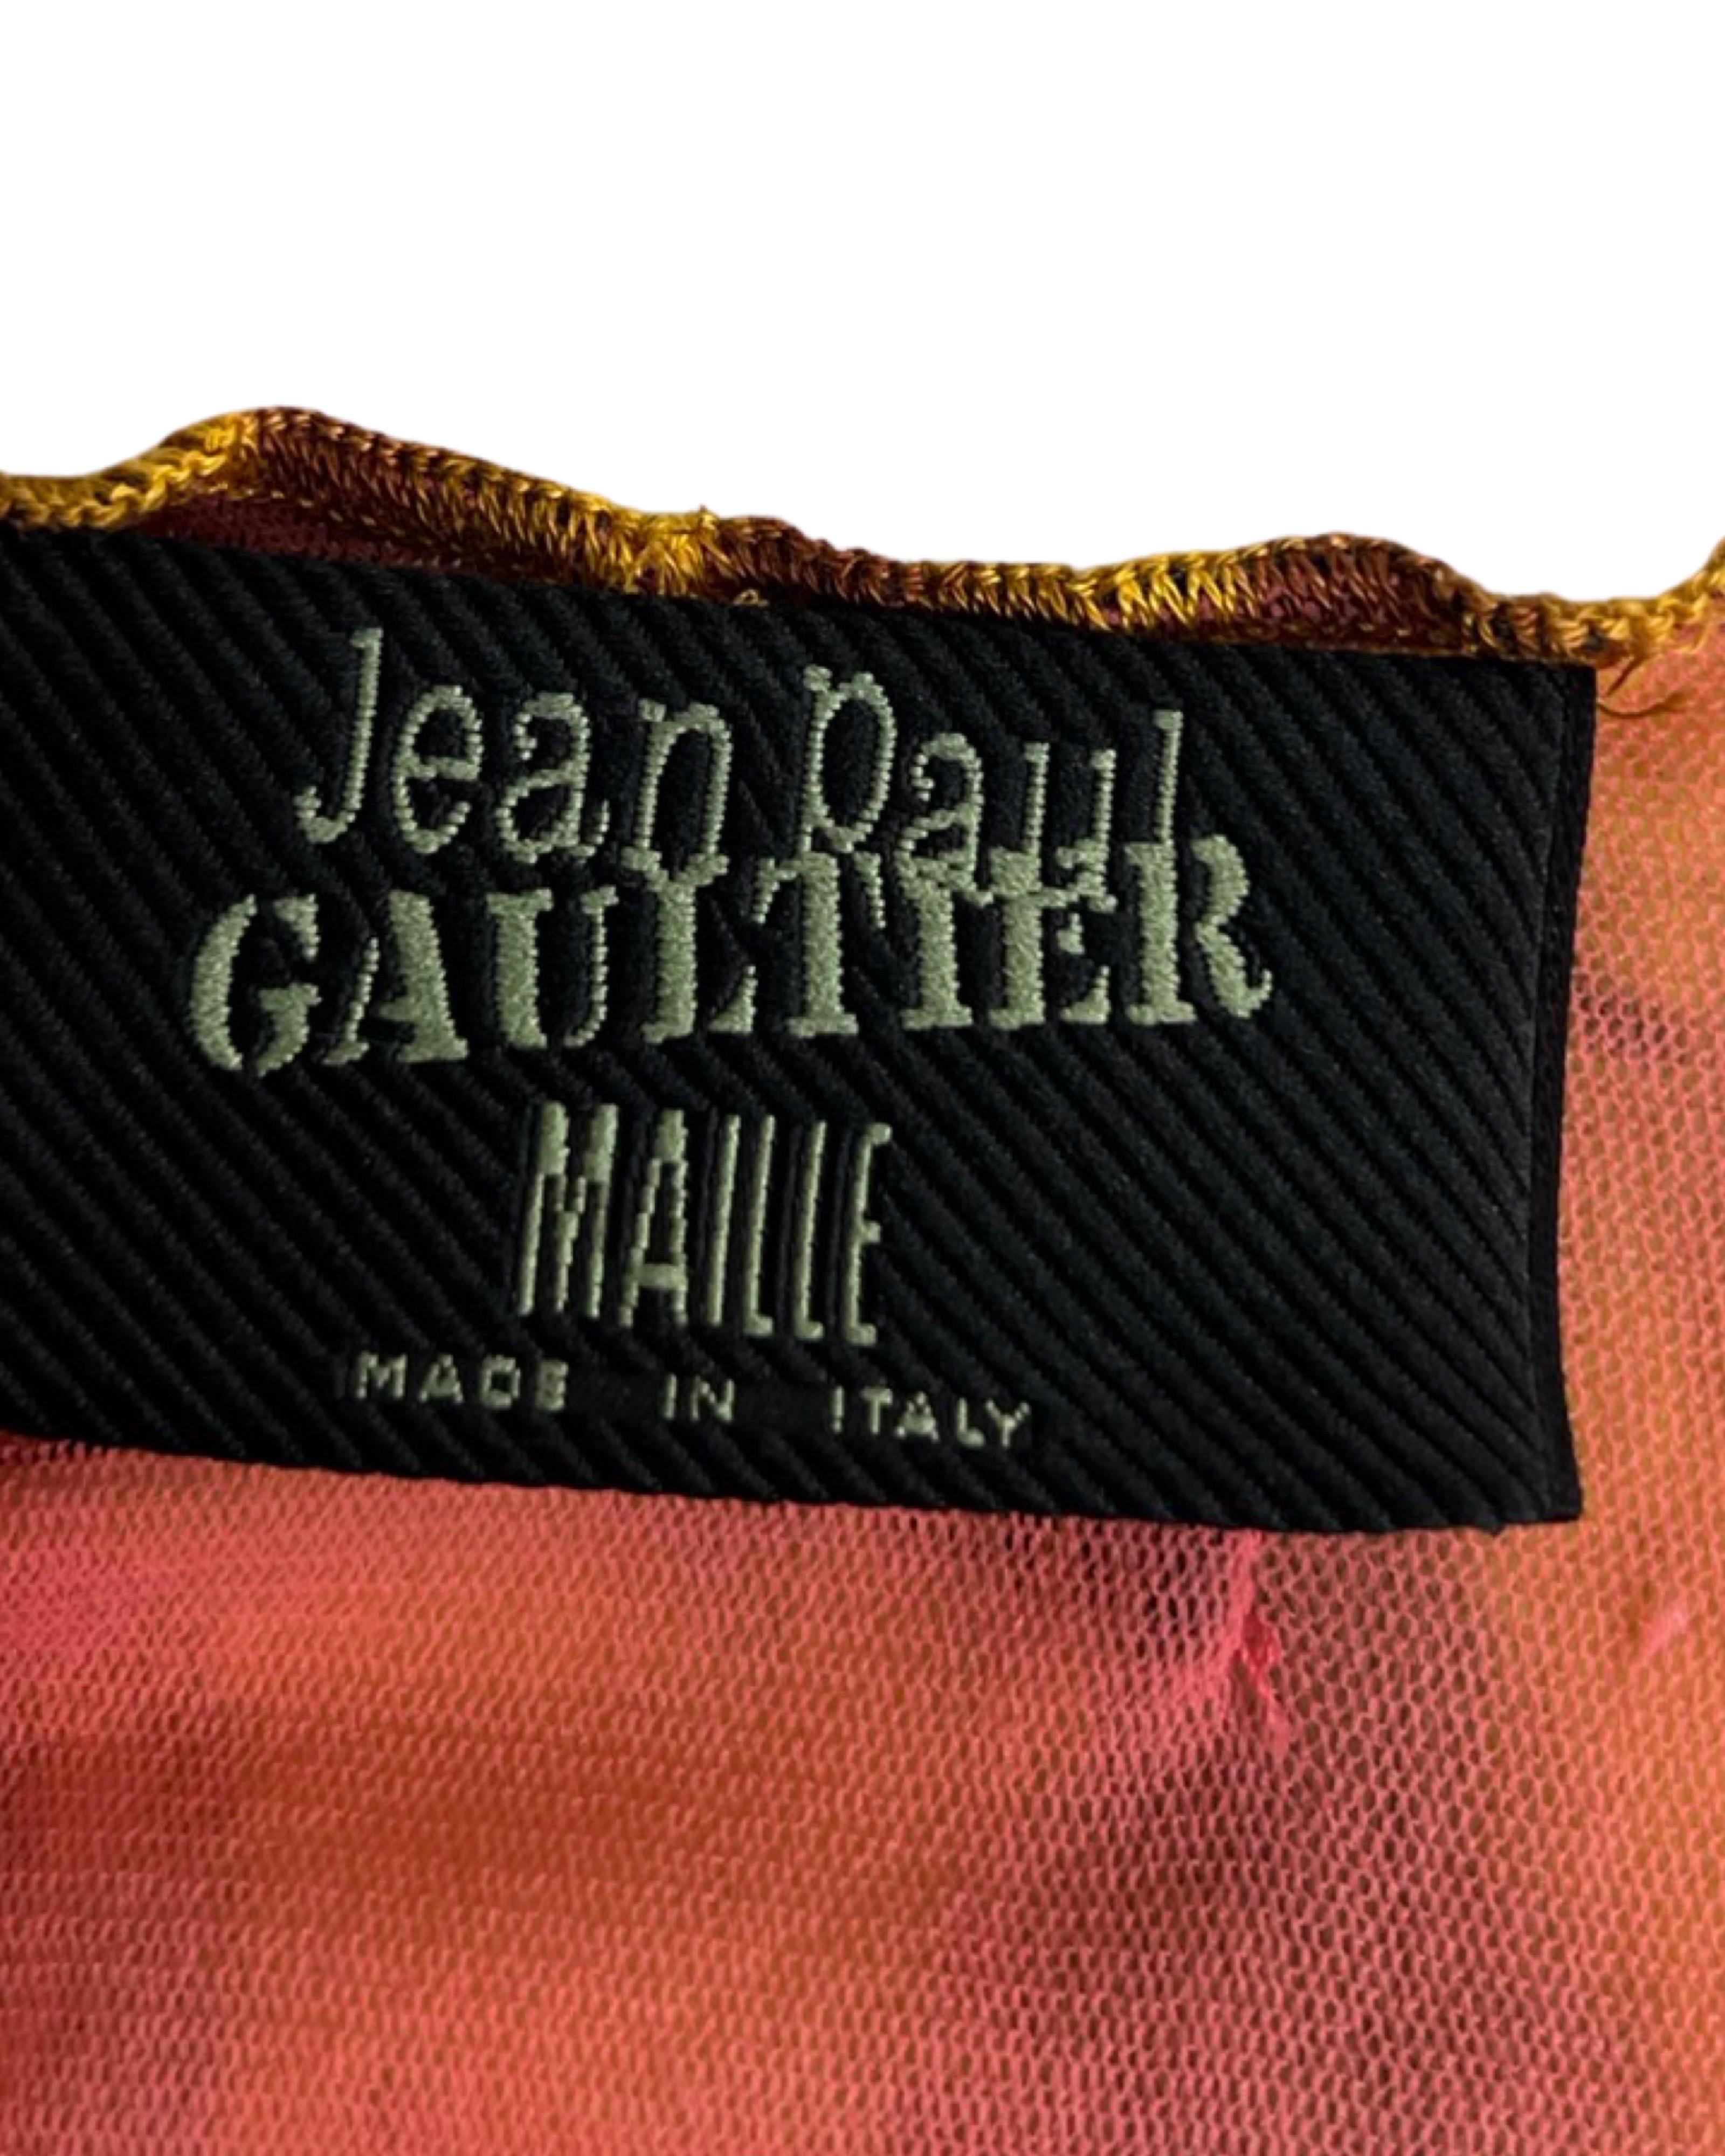 Jean-Paul Gaultier Spring 1999 Venus De Milo Mesh Dress In Good Condition For Sale In Prague, CZ